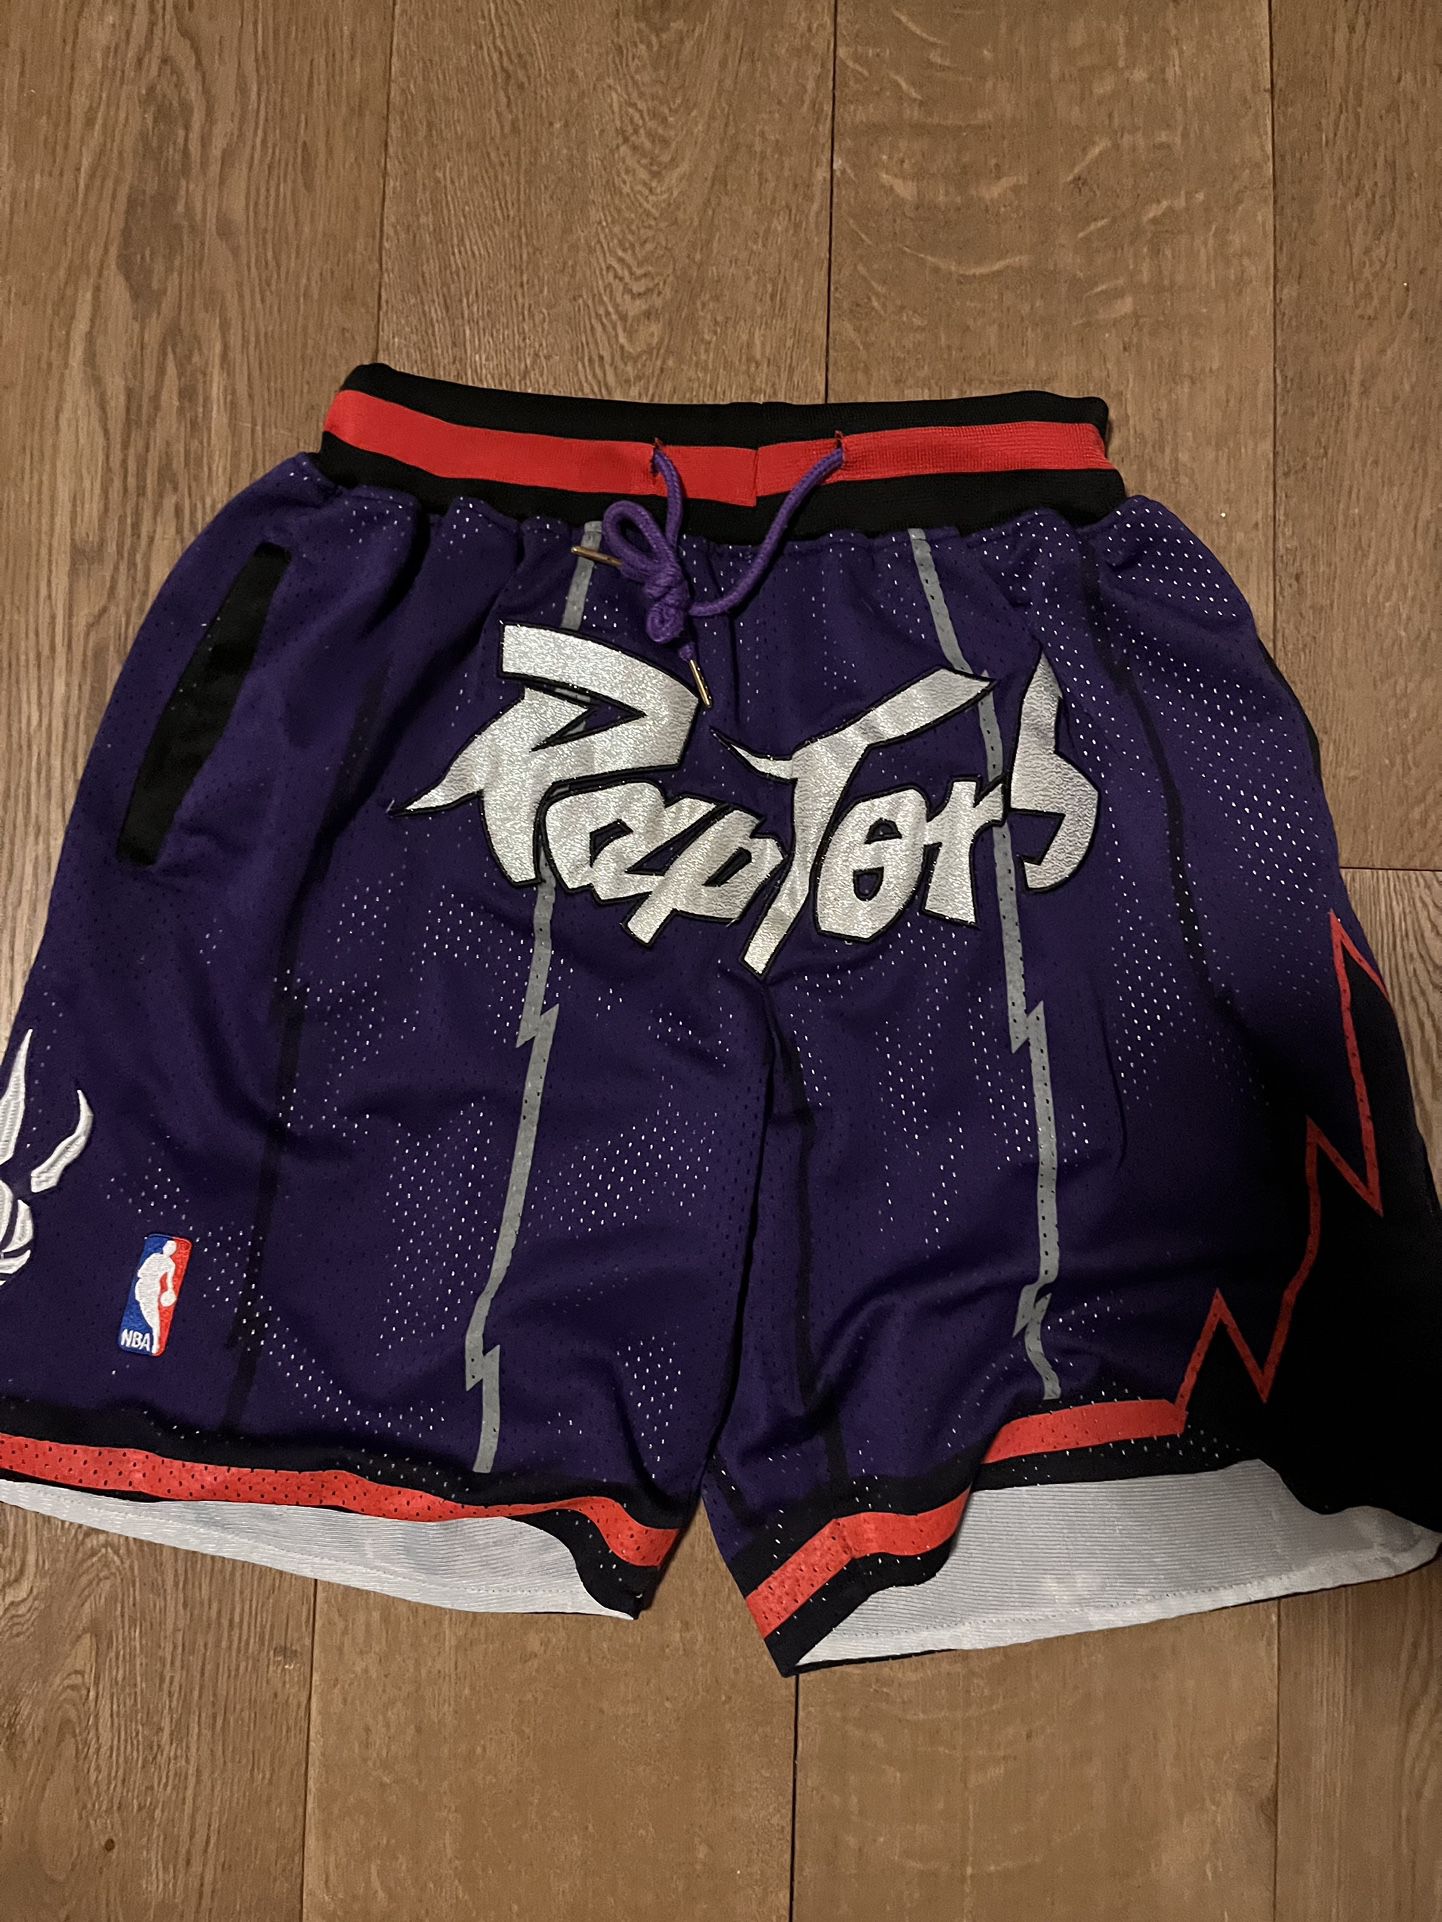 Toronto Raptors Retro Jersey Shorts Size M